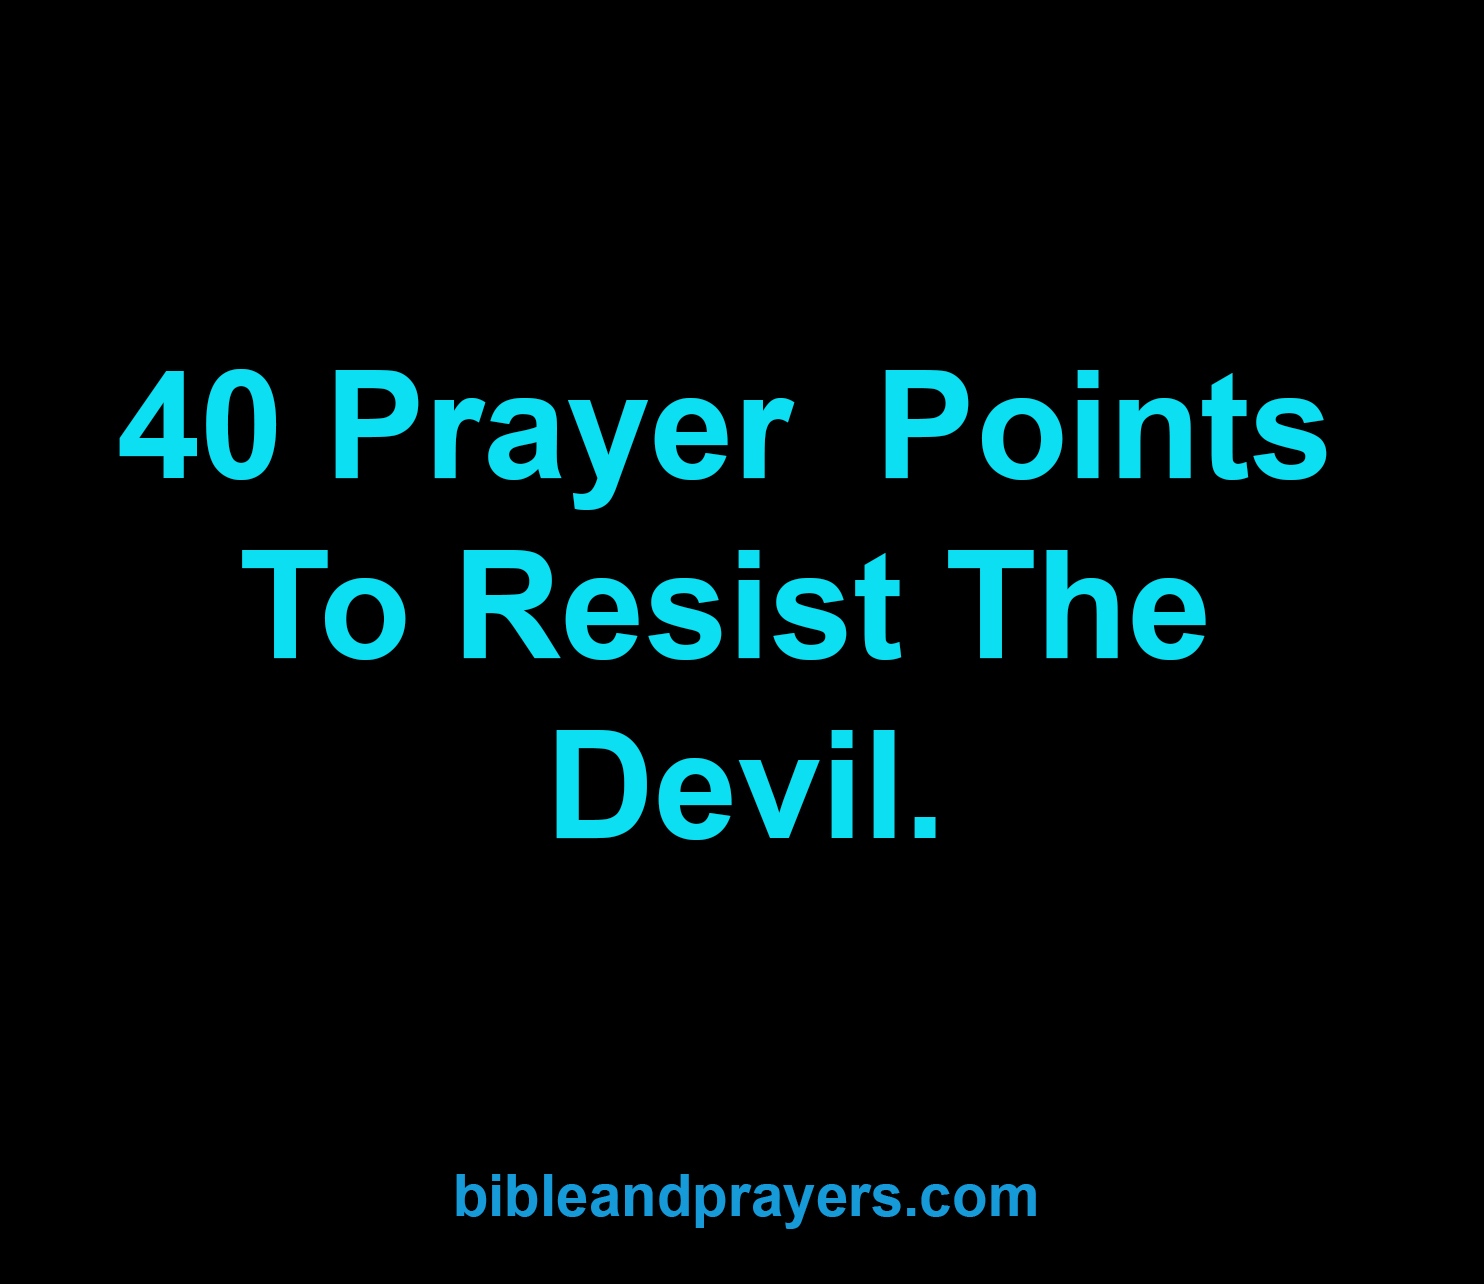 40 Prayer Points To Resist The Devil.